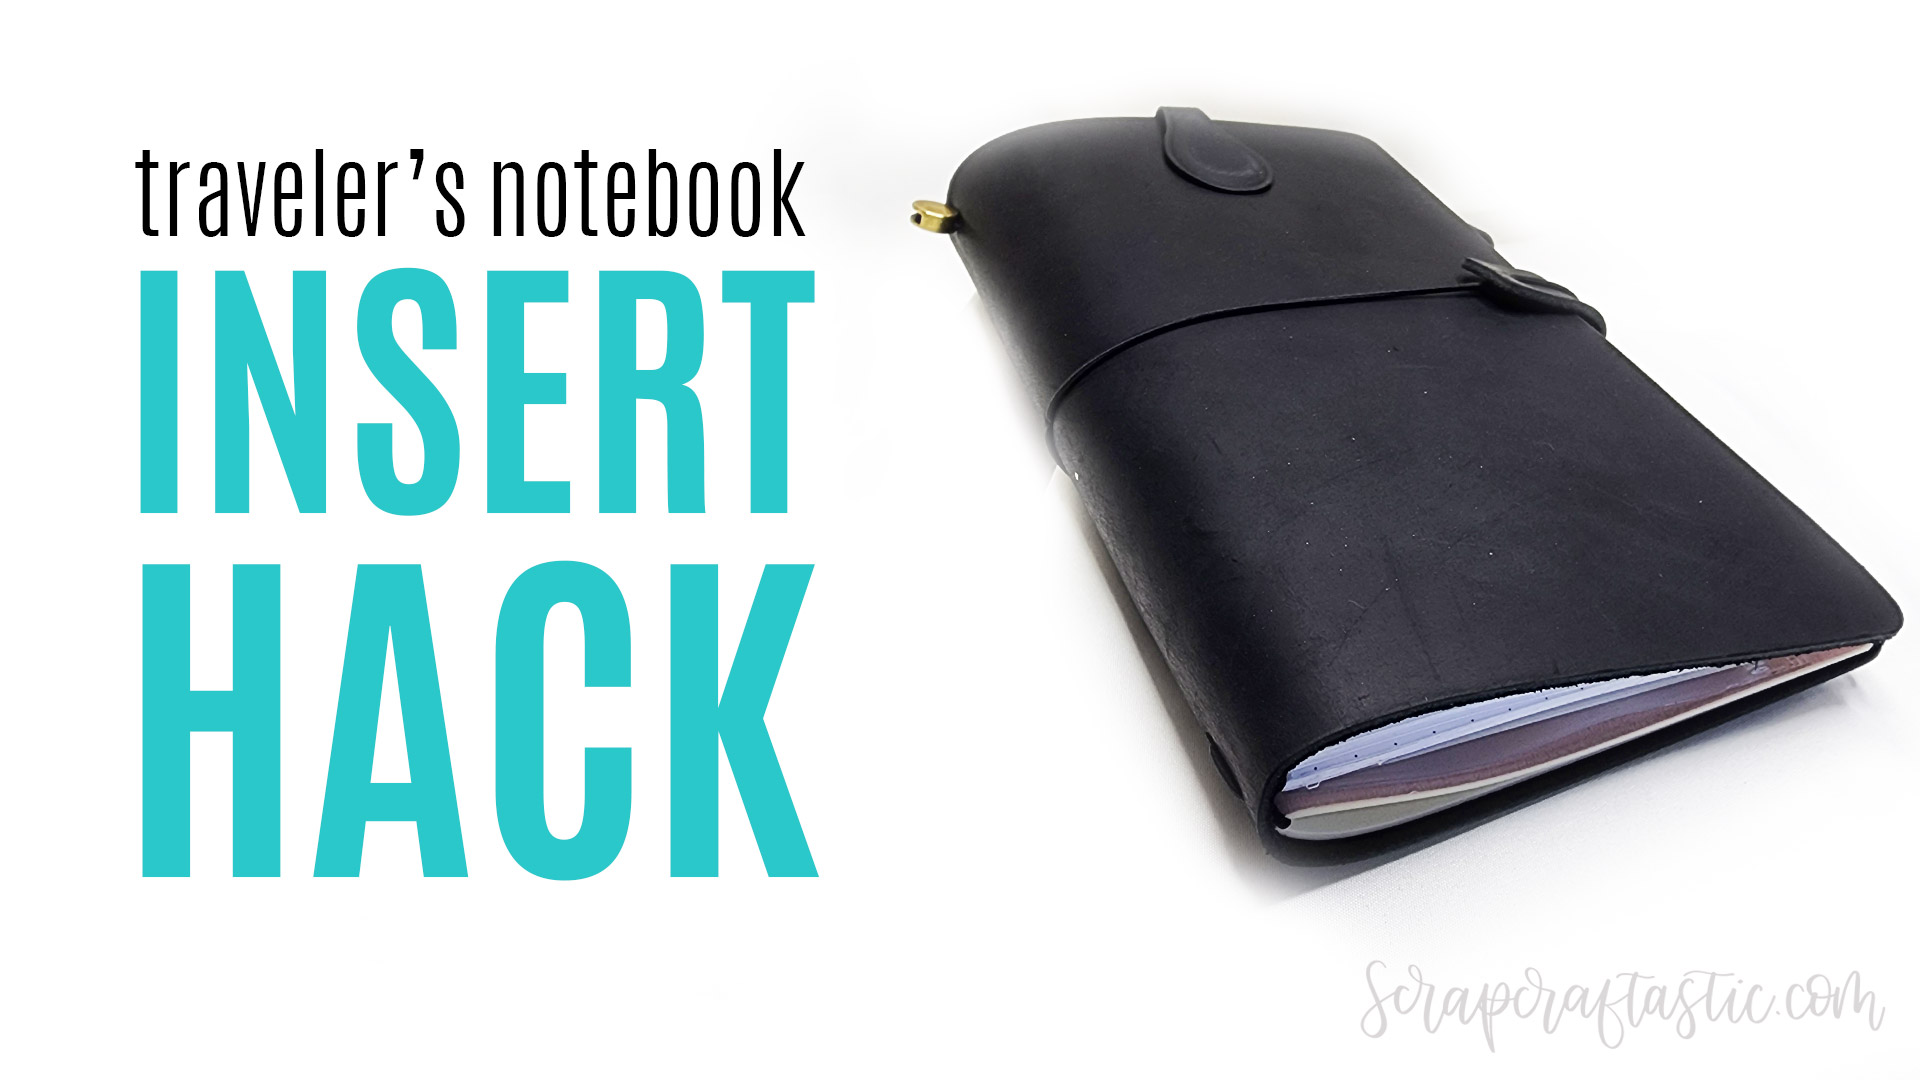 Traveler's Notebook Insert Hack